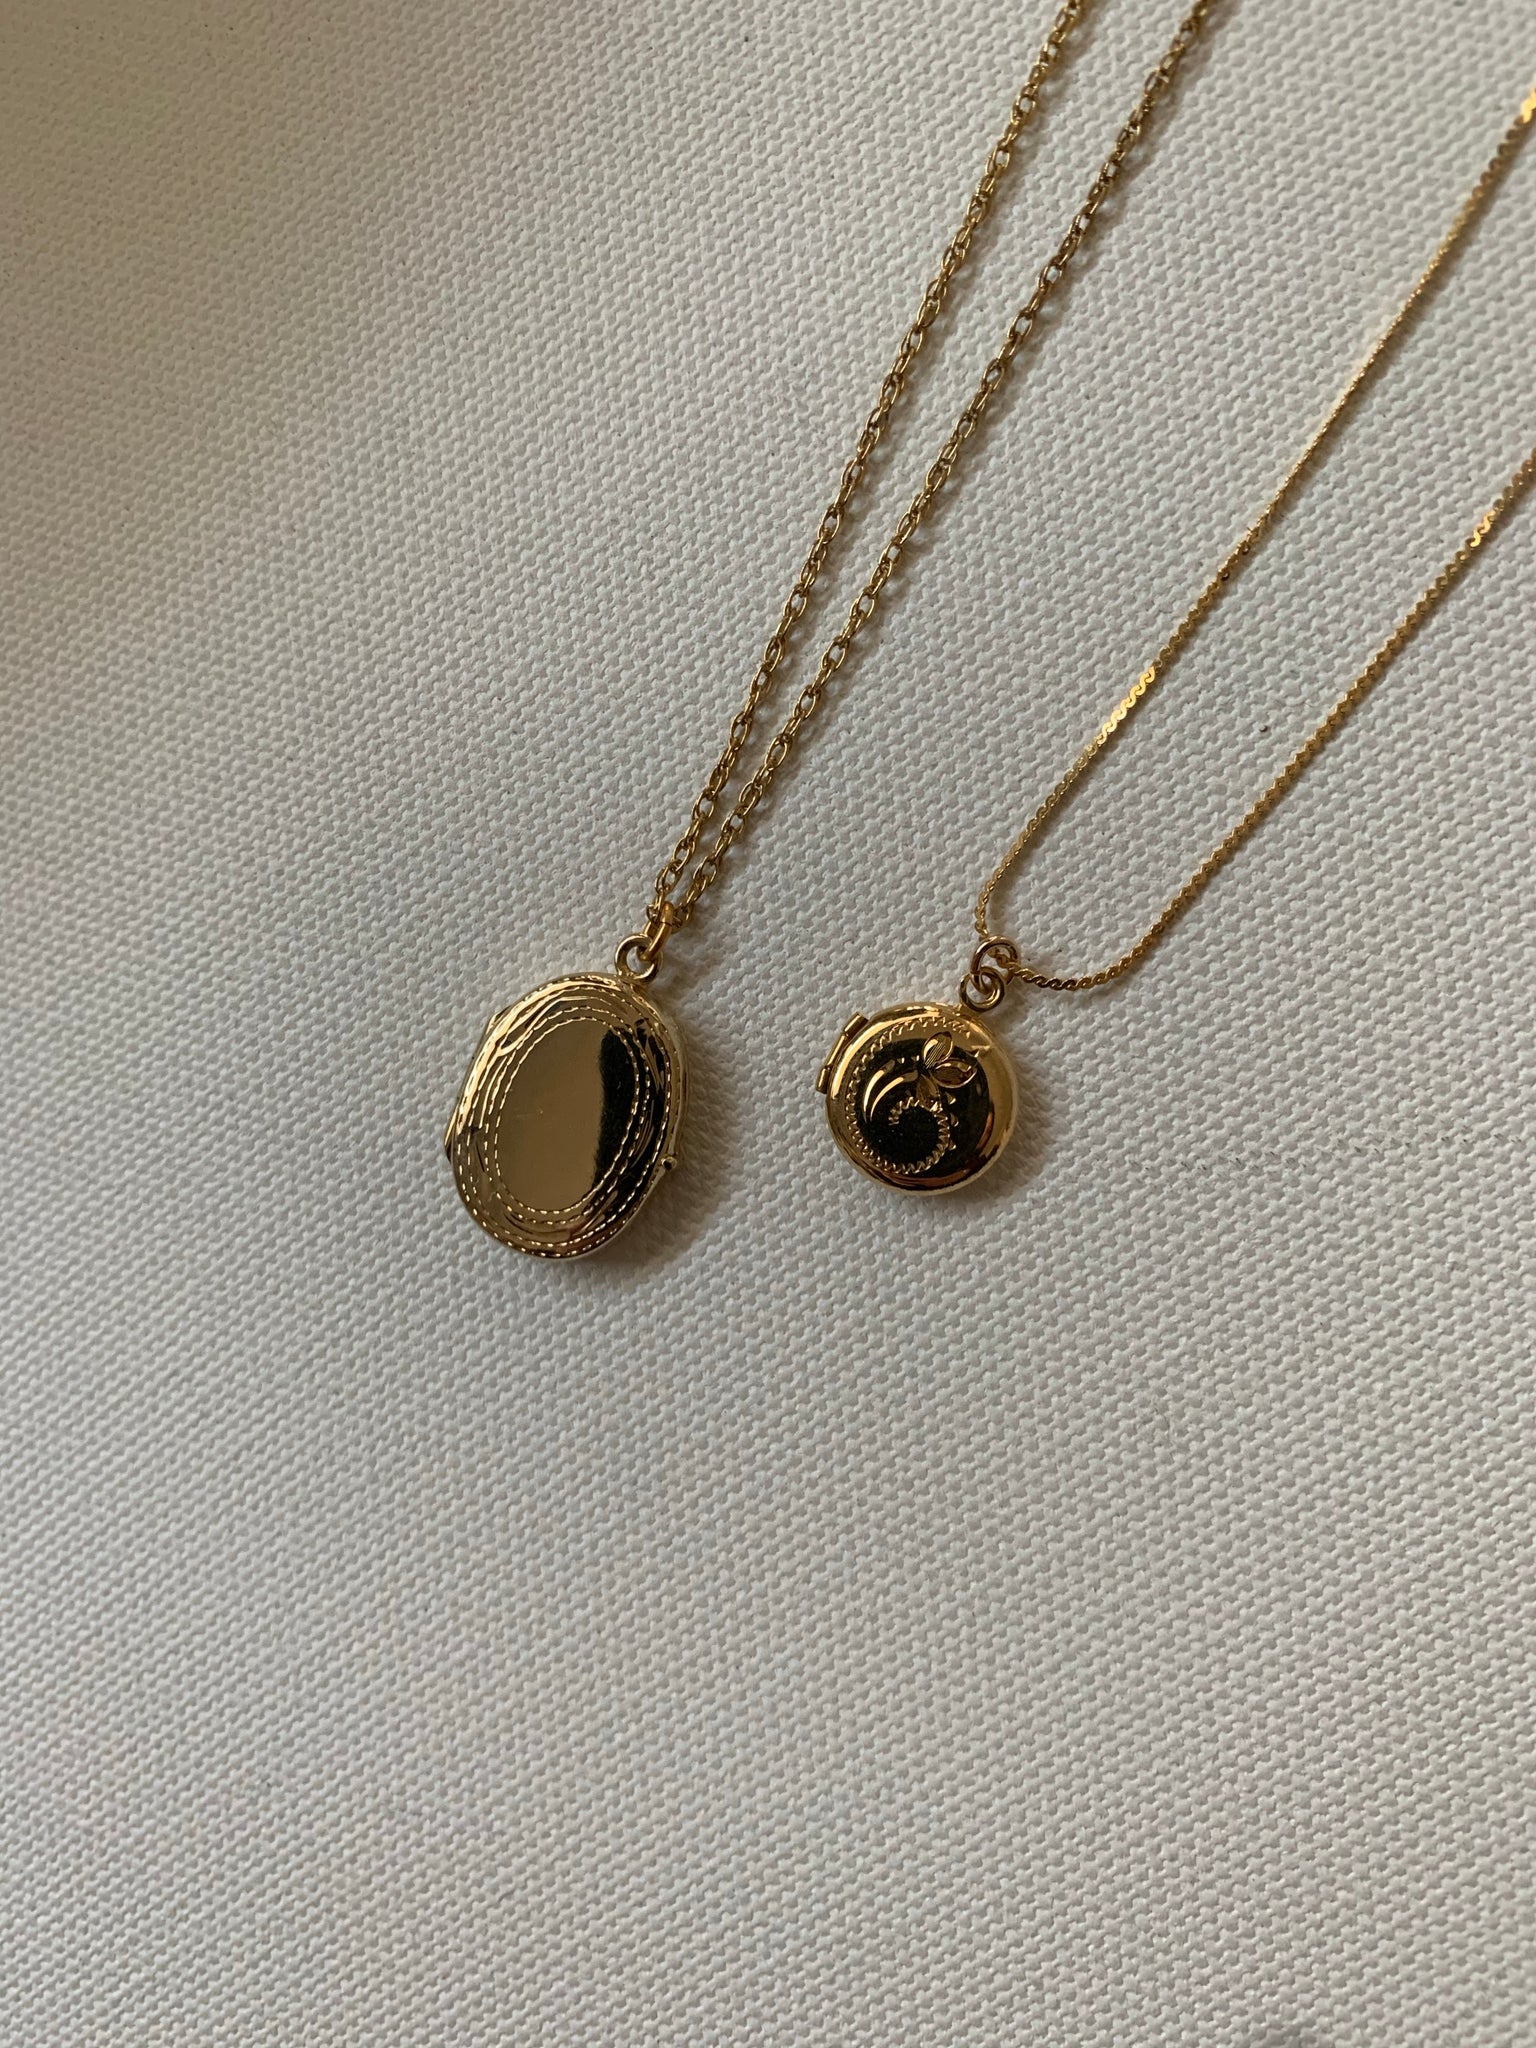 Stone Cooper vintage Oval locket necklace